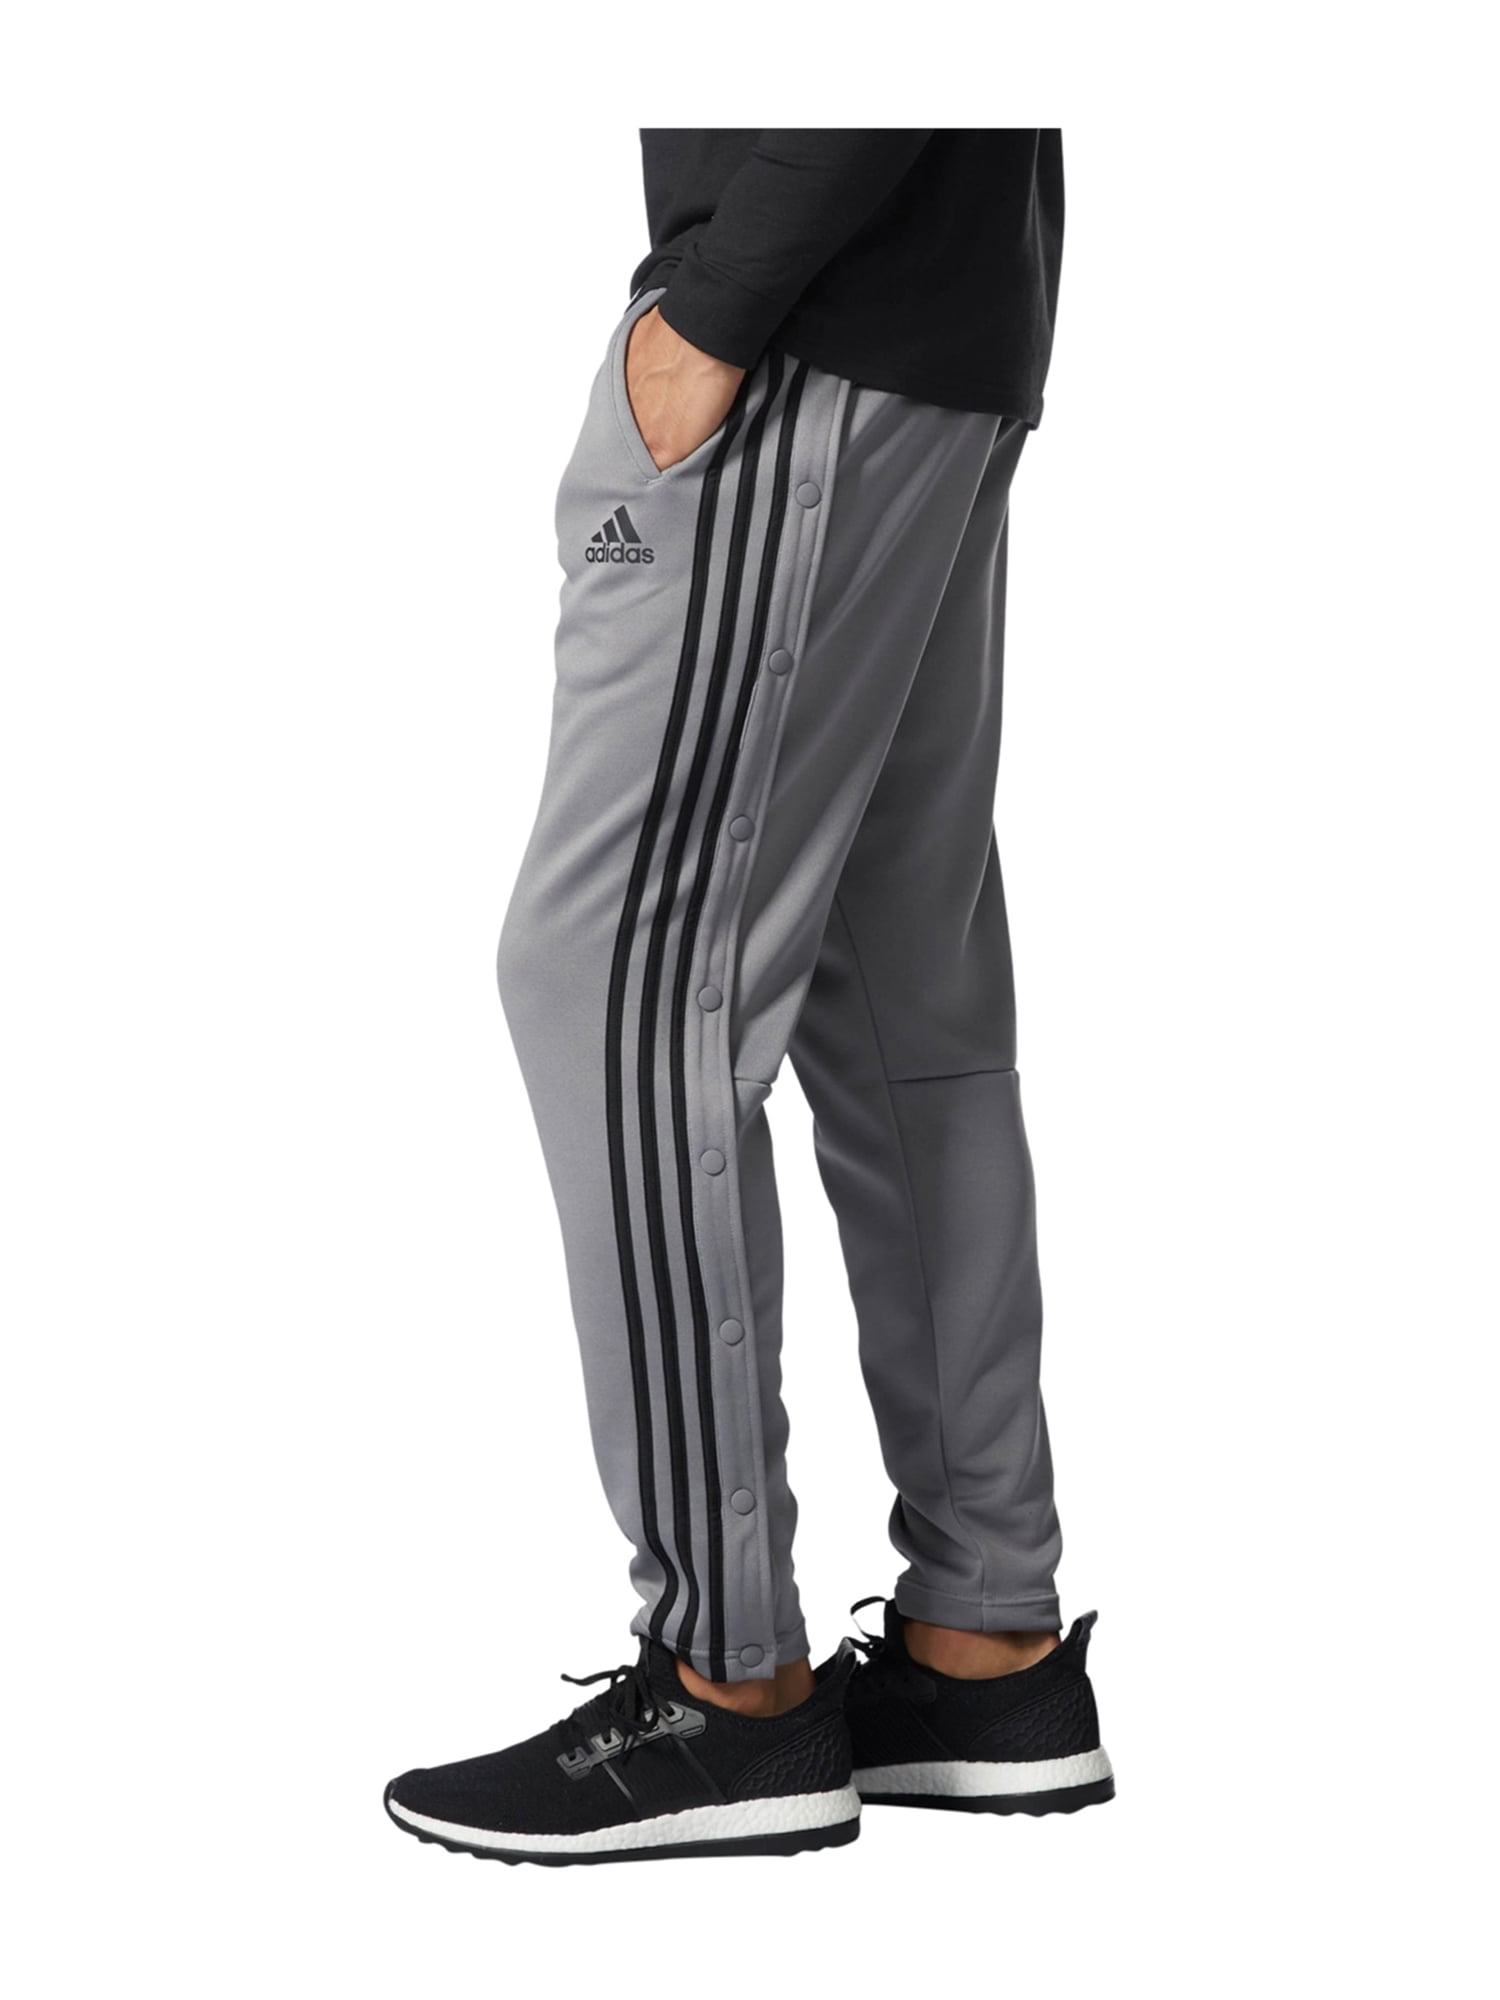 Adidas Mens Snap Down Legs Athletic Track Pants gray XL/30 | Walmart Canada